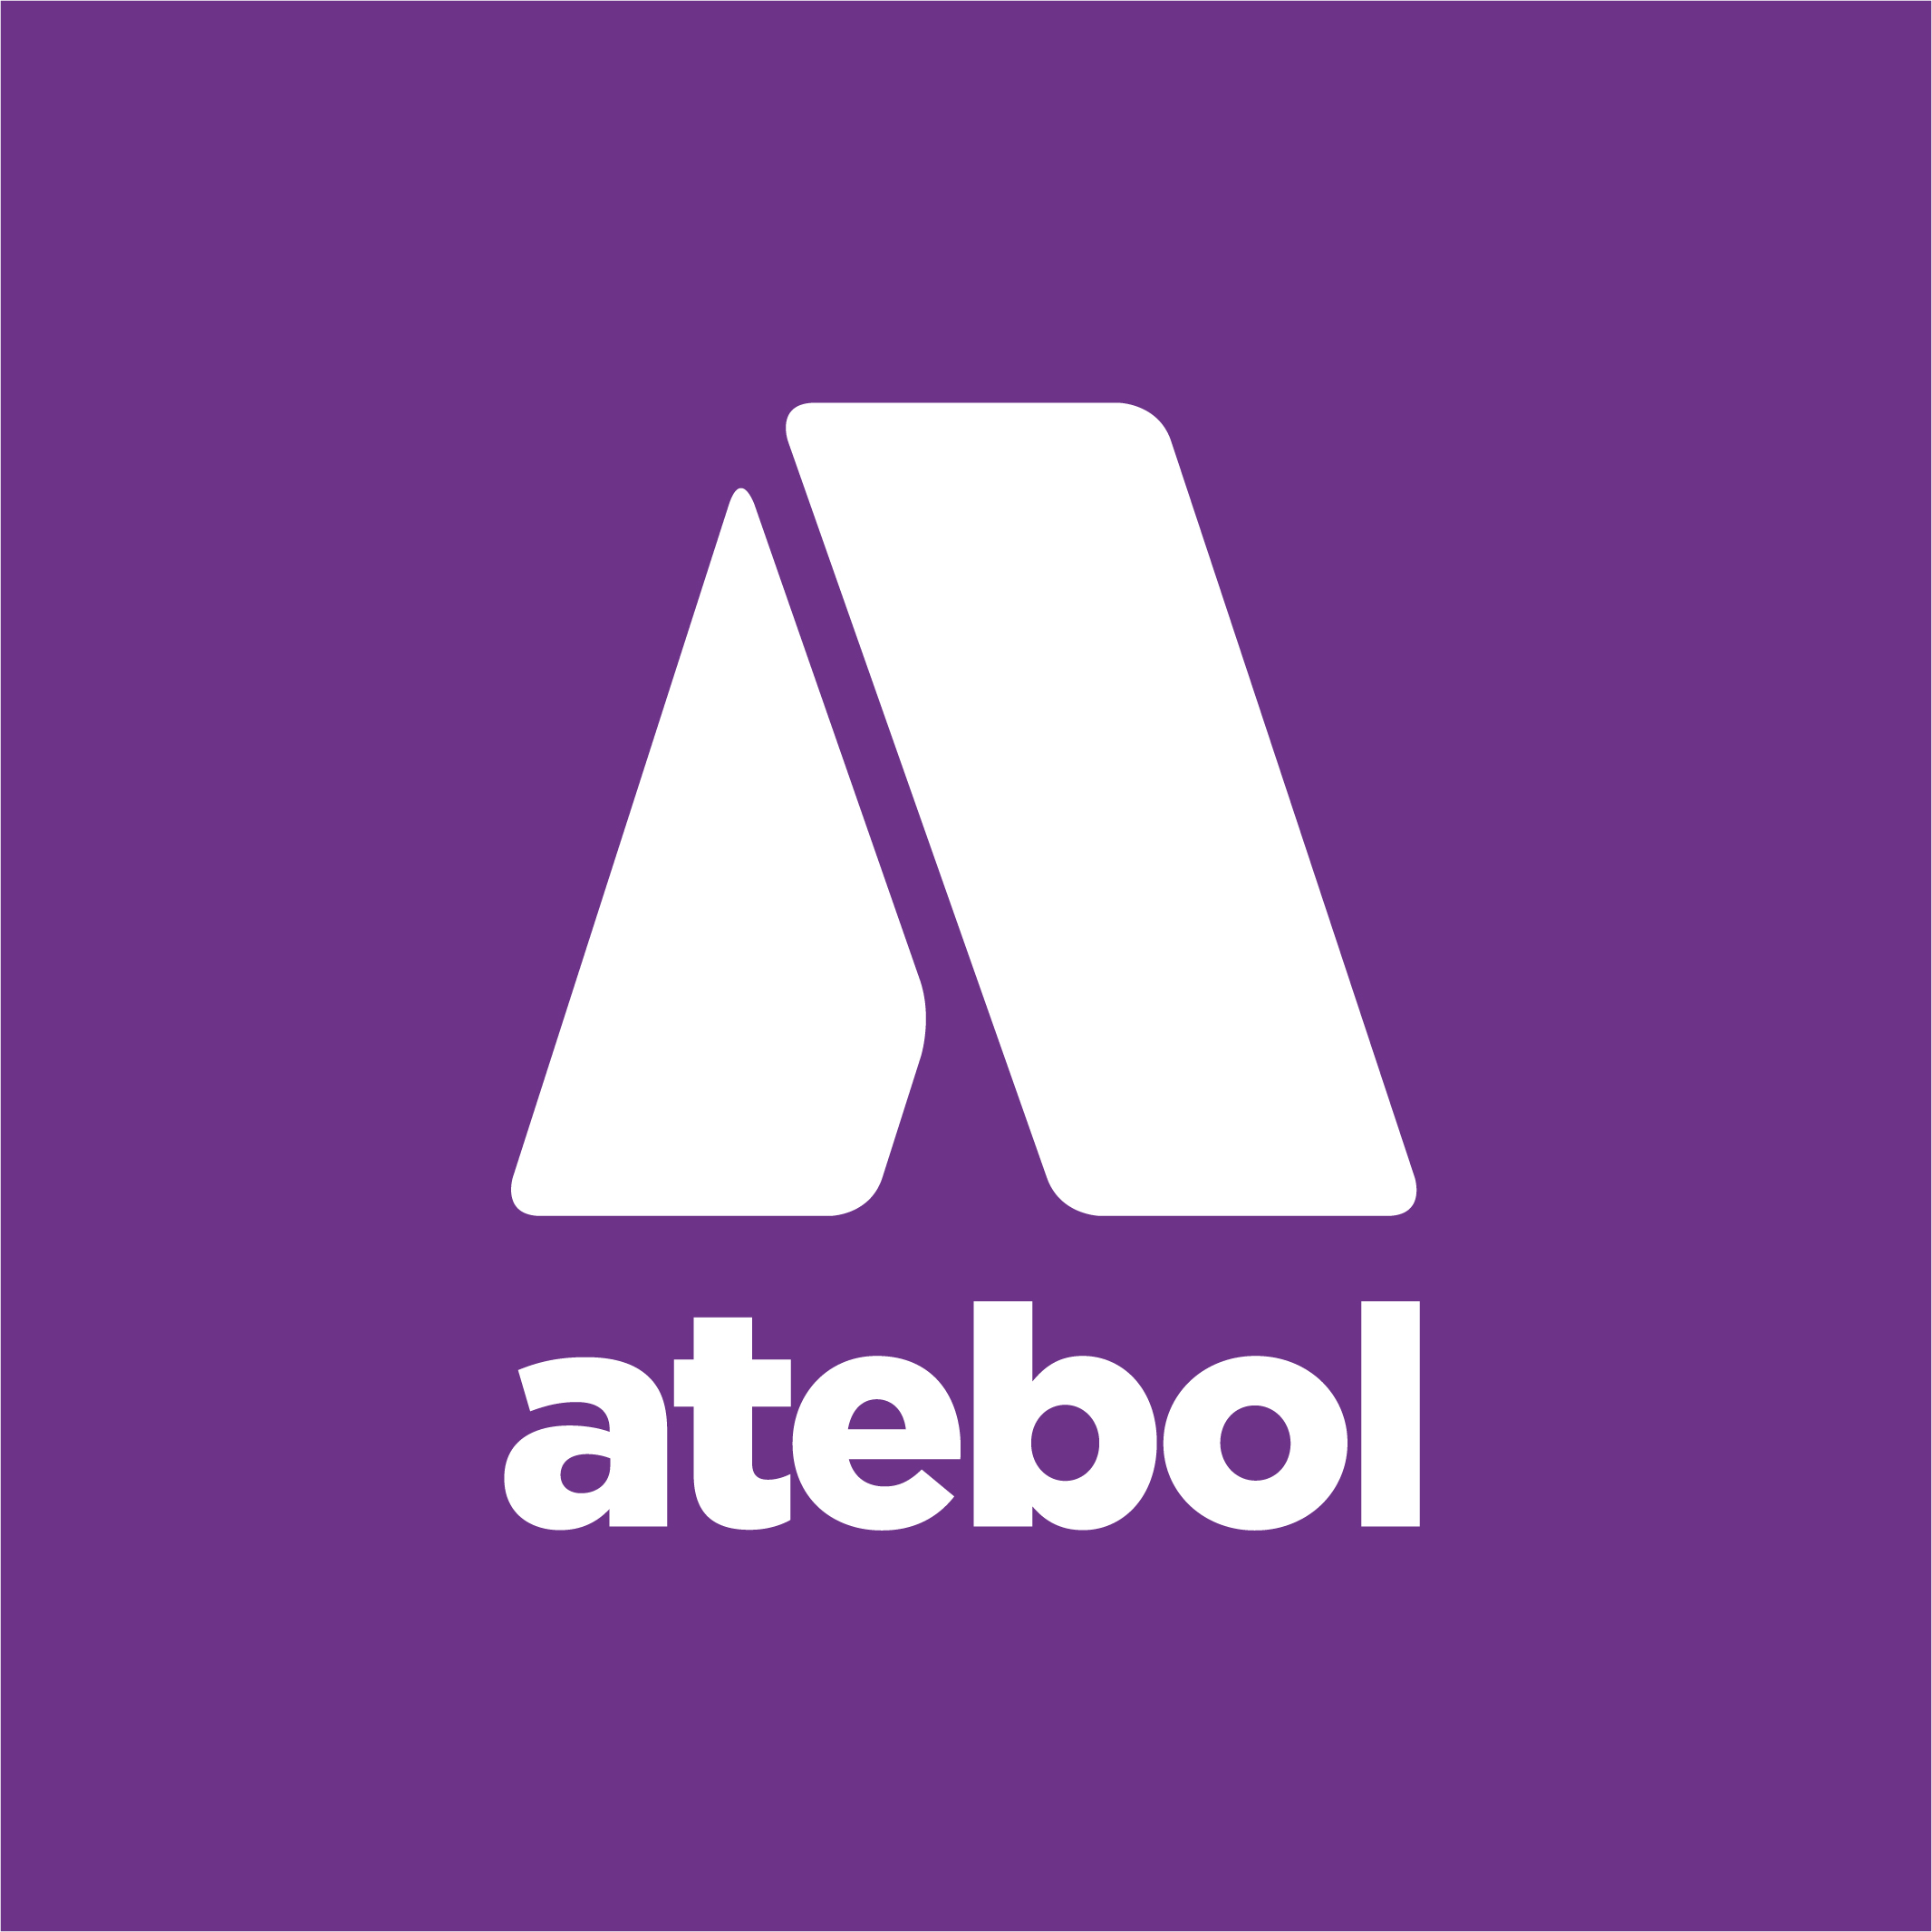 Atebol brand logo